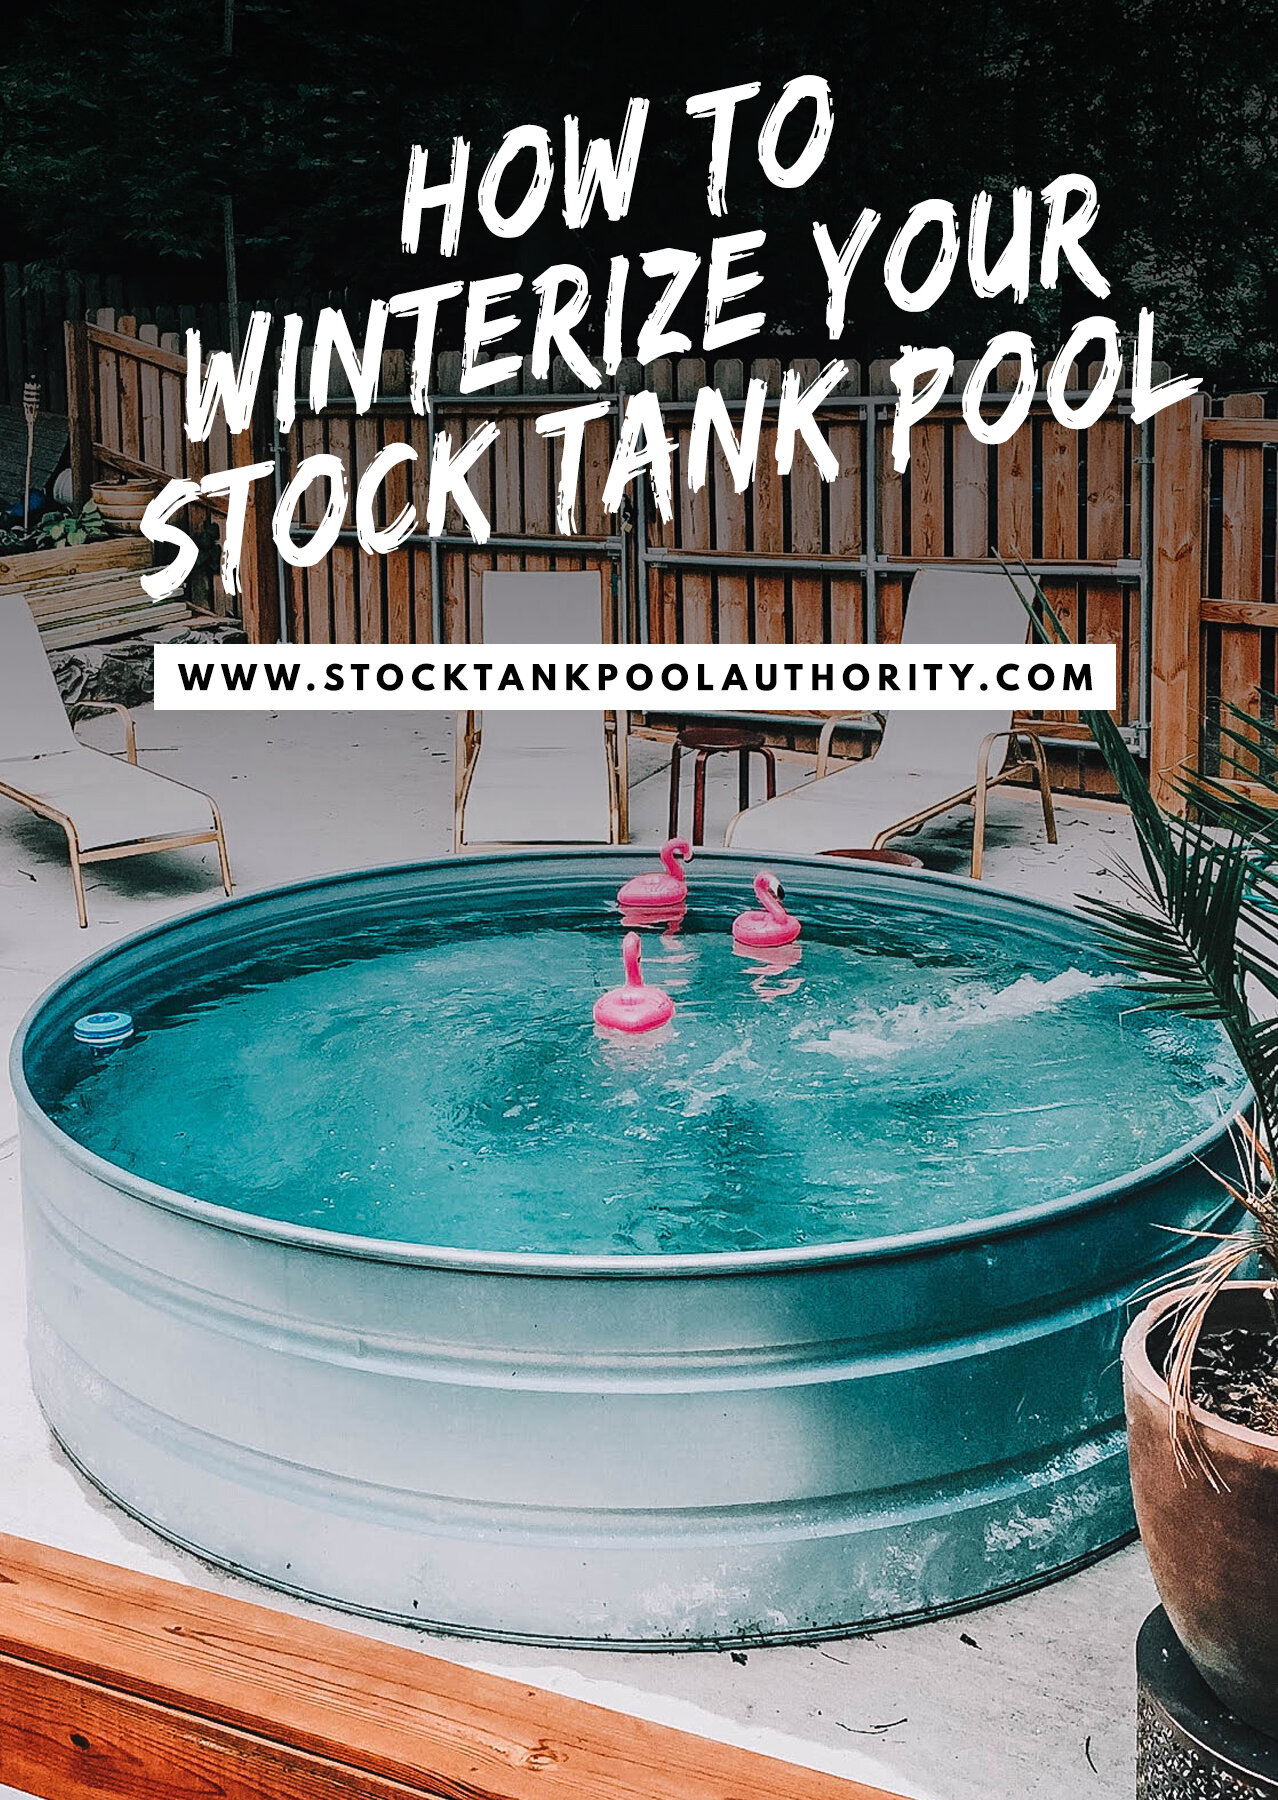 Stock Tank Pool Authority Winterize Tips 3.jpg